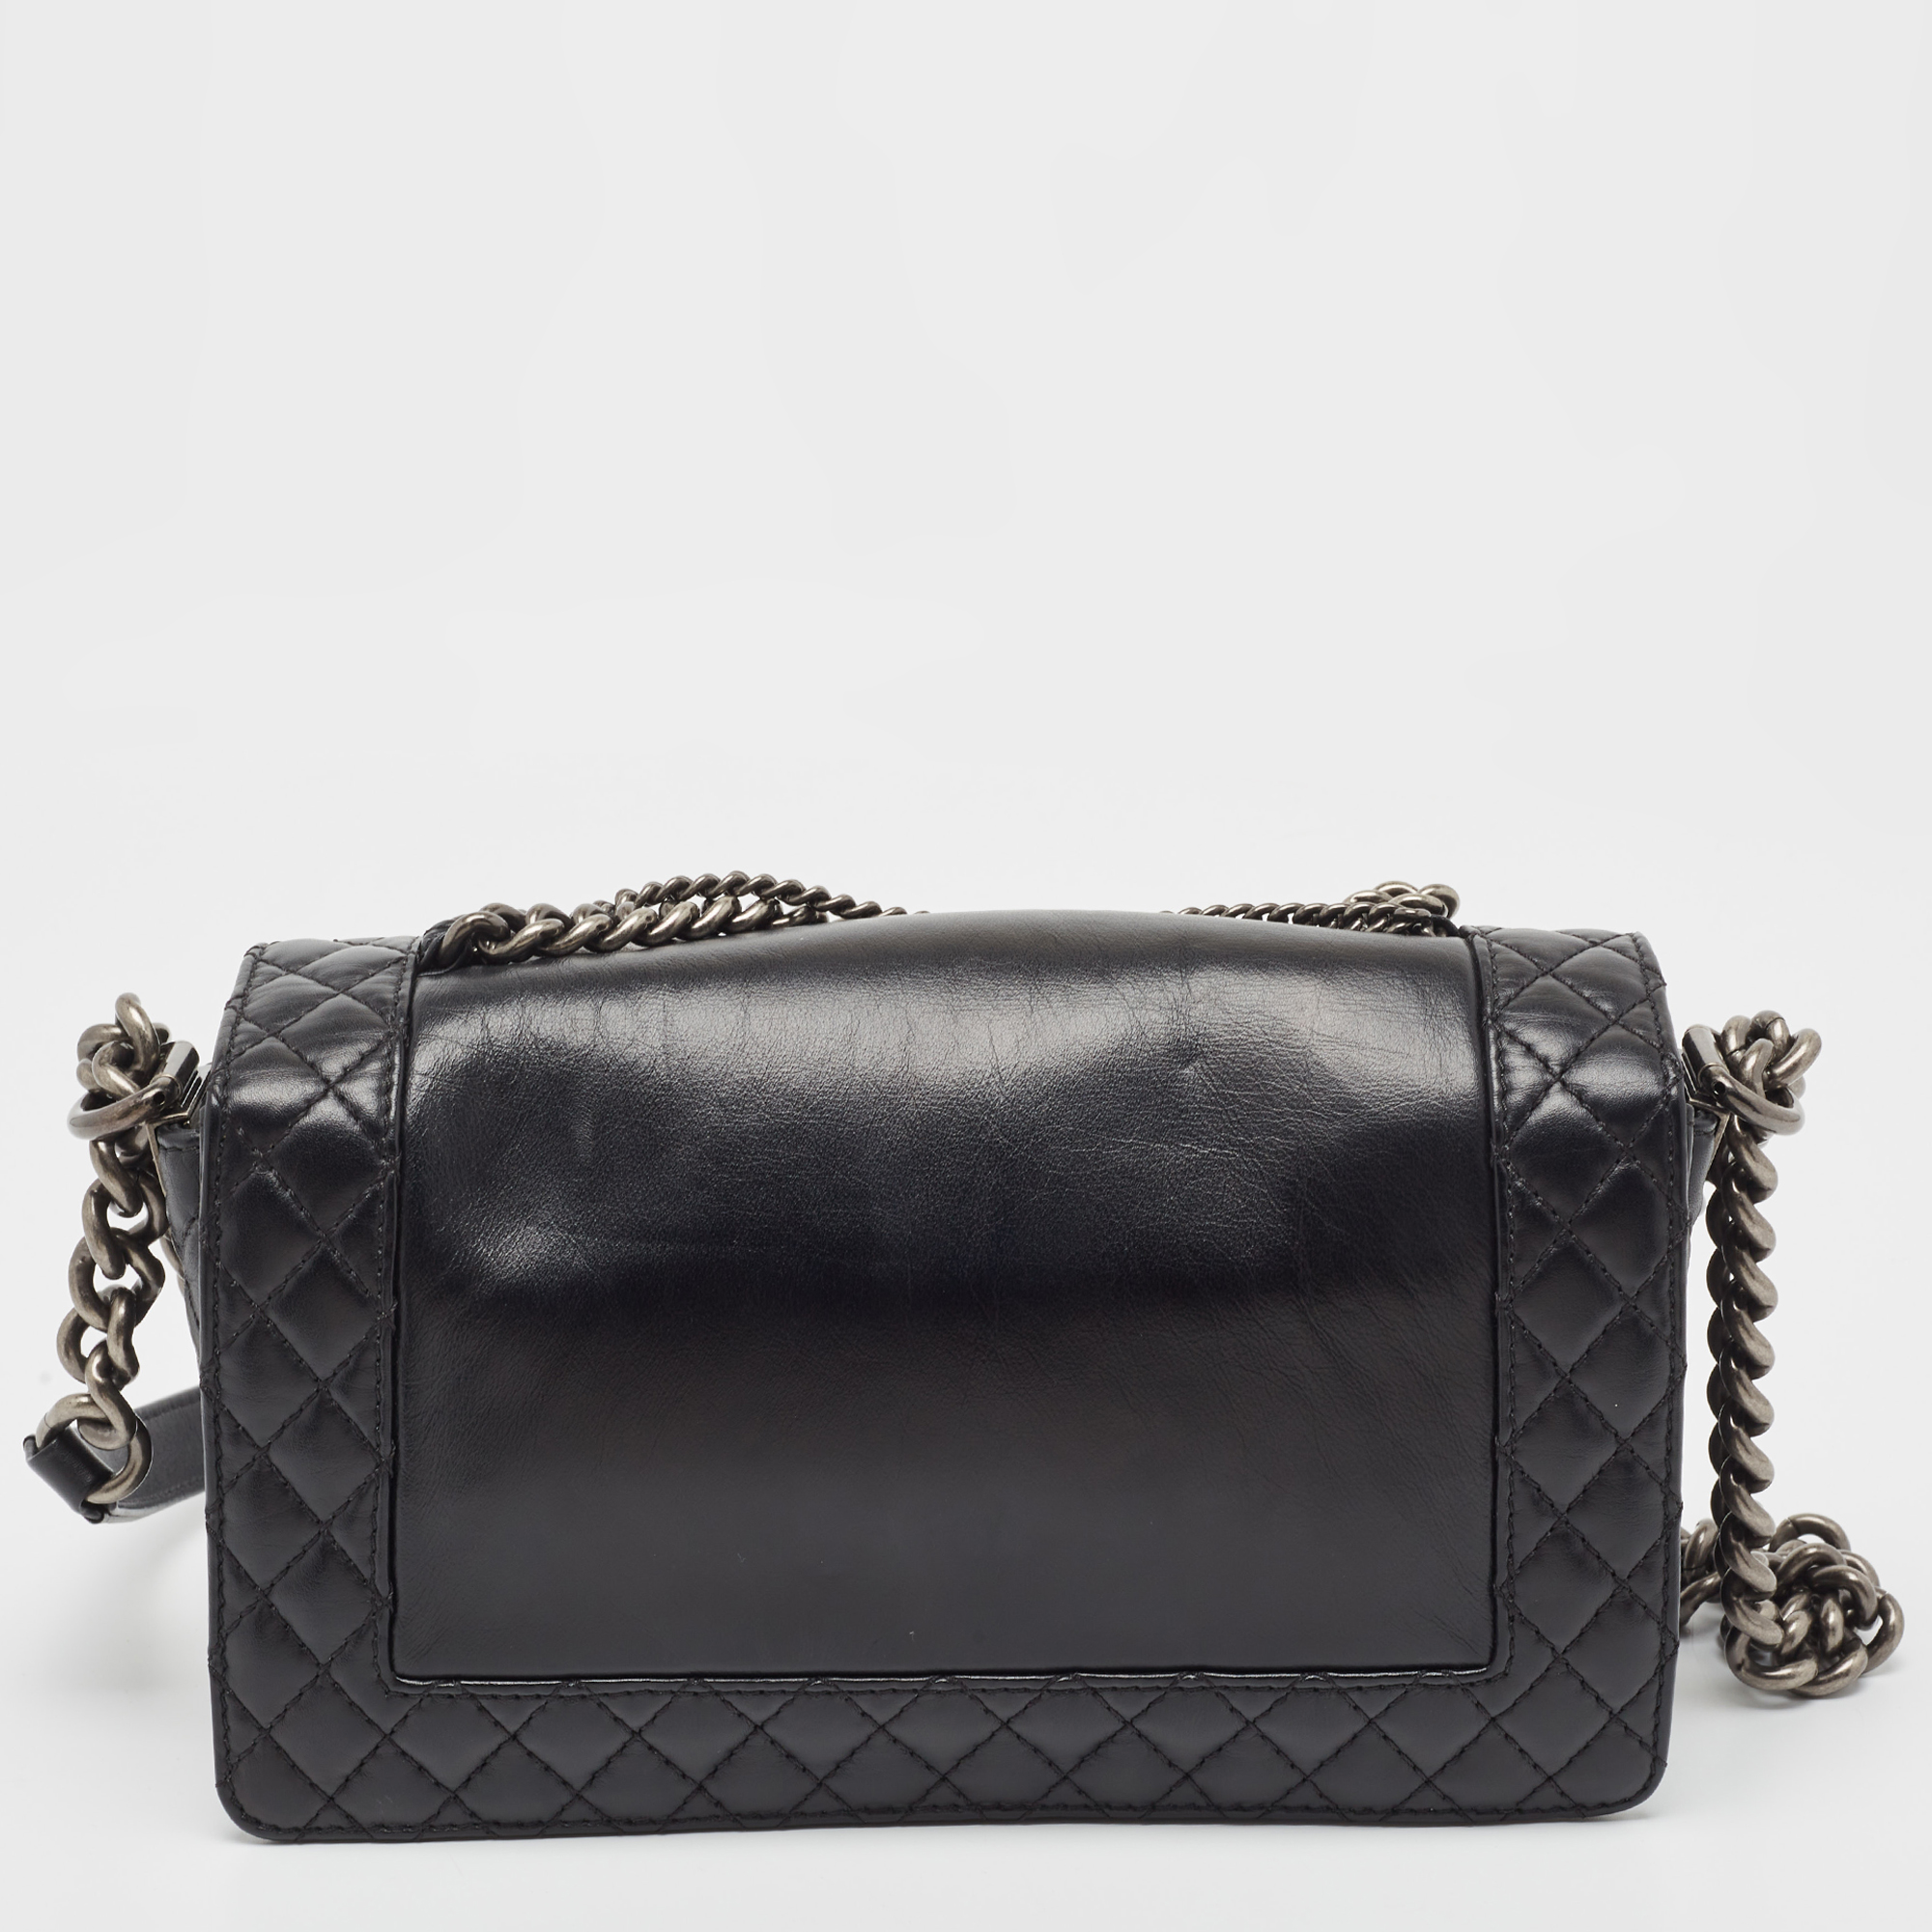 Chanel Black Leather Medium Enchained Boy Flap Bag